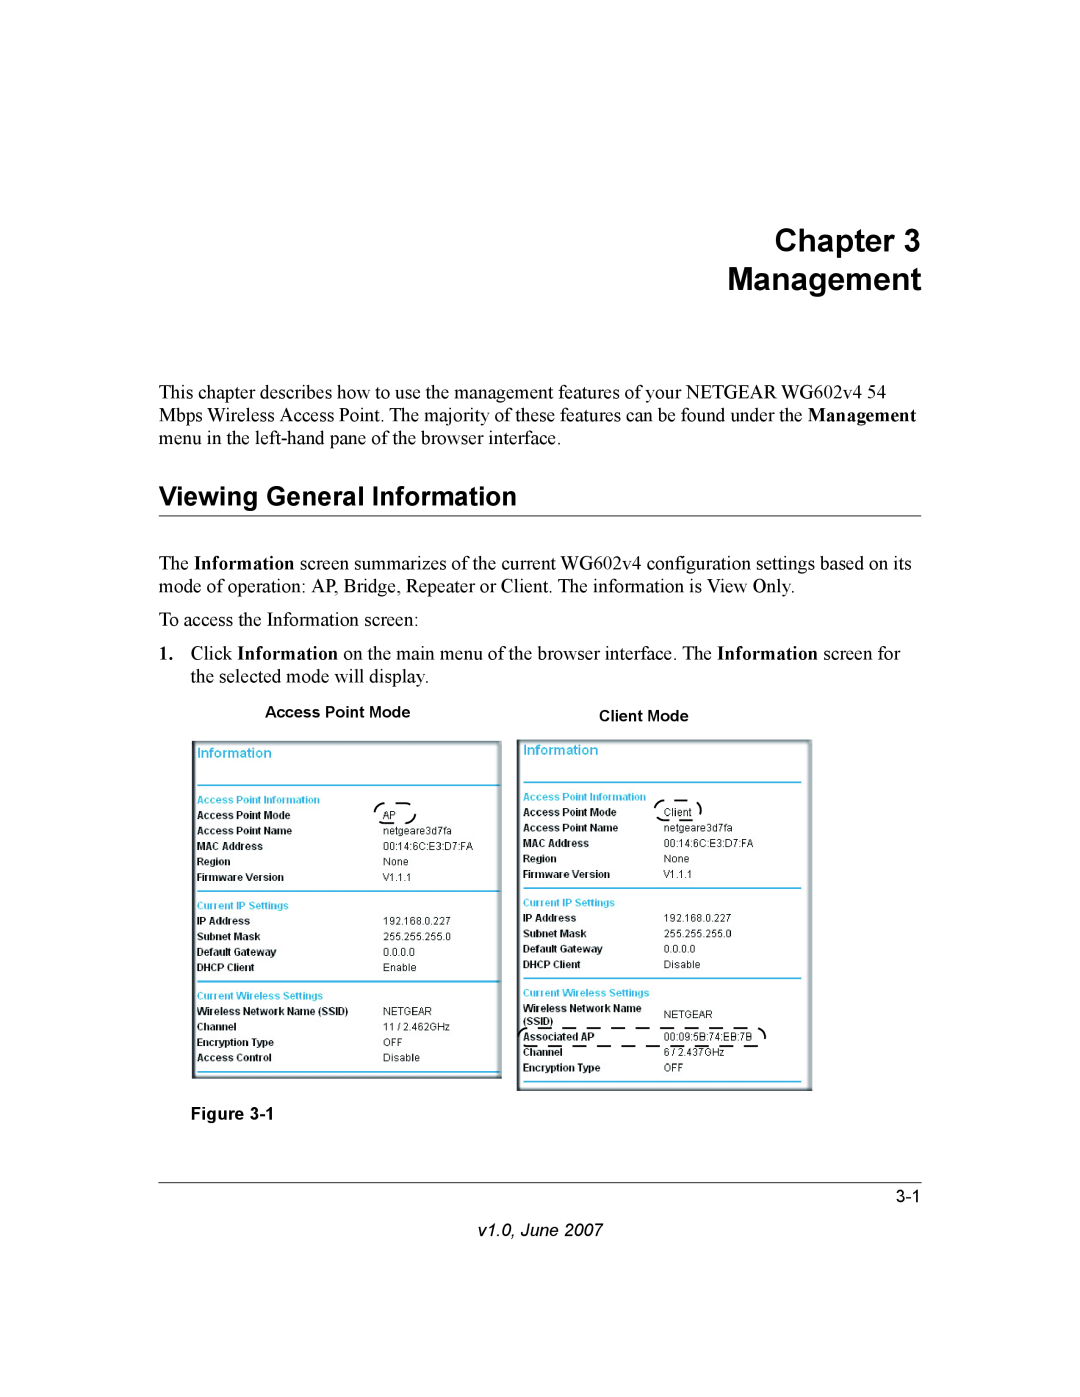 NETGEAR WG602V4 manual Chapter Management, Viewing General Information 